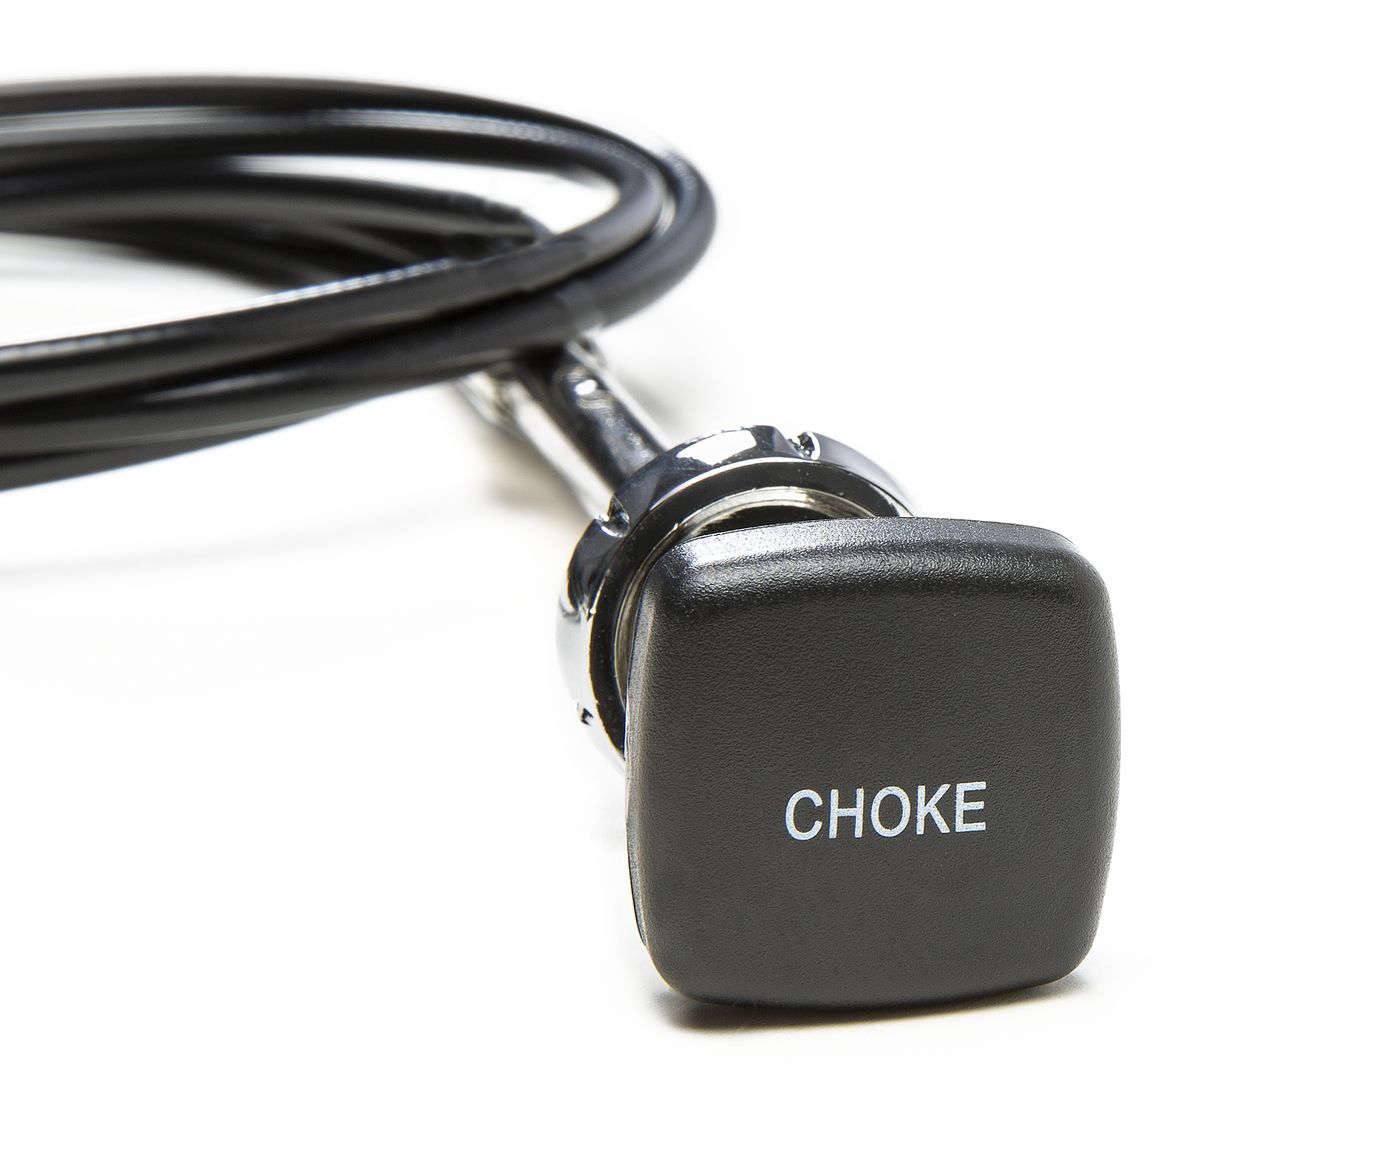 Chokezug
Choke cable
Tirette de starter
Linka dławika
Cable del